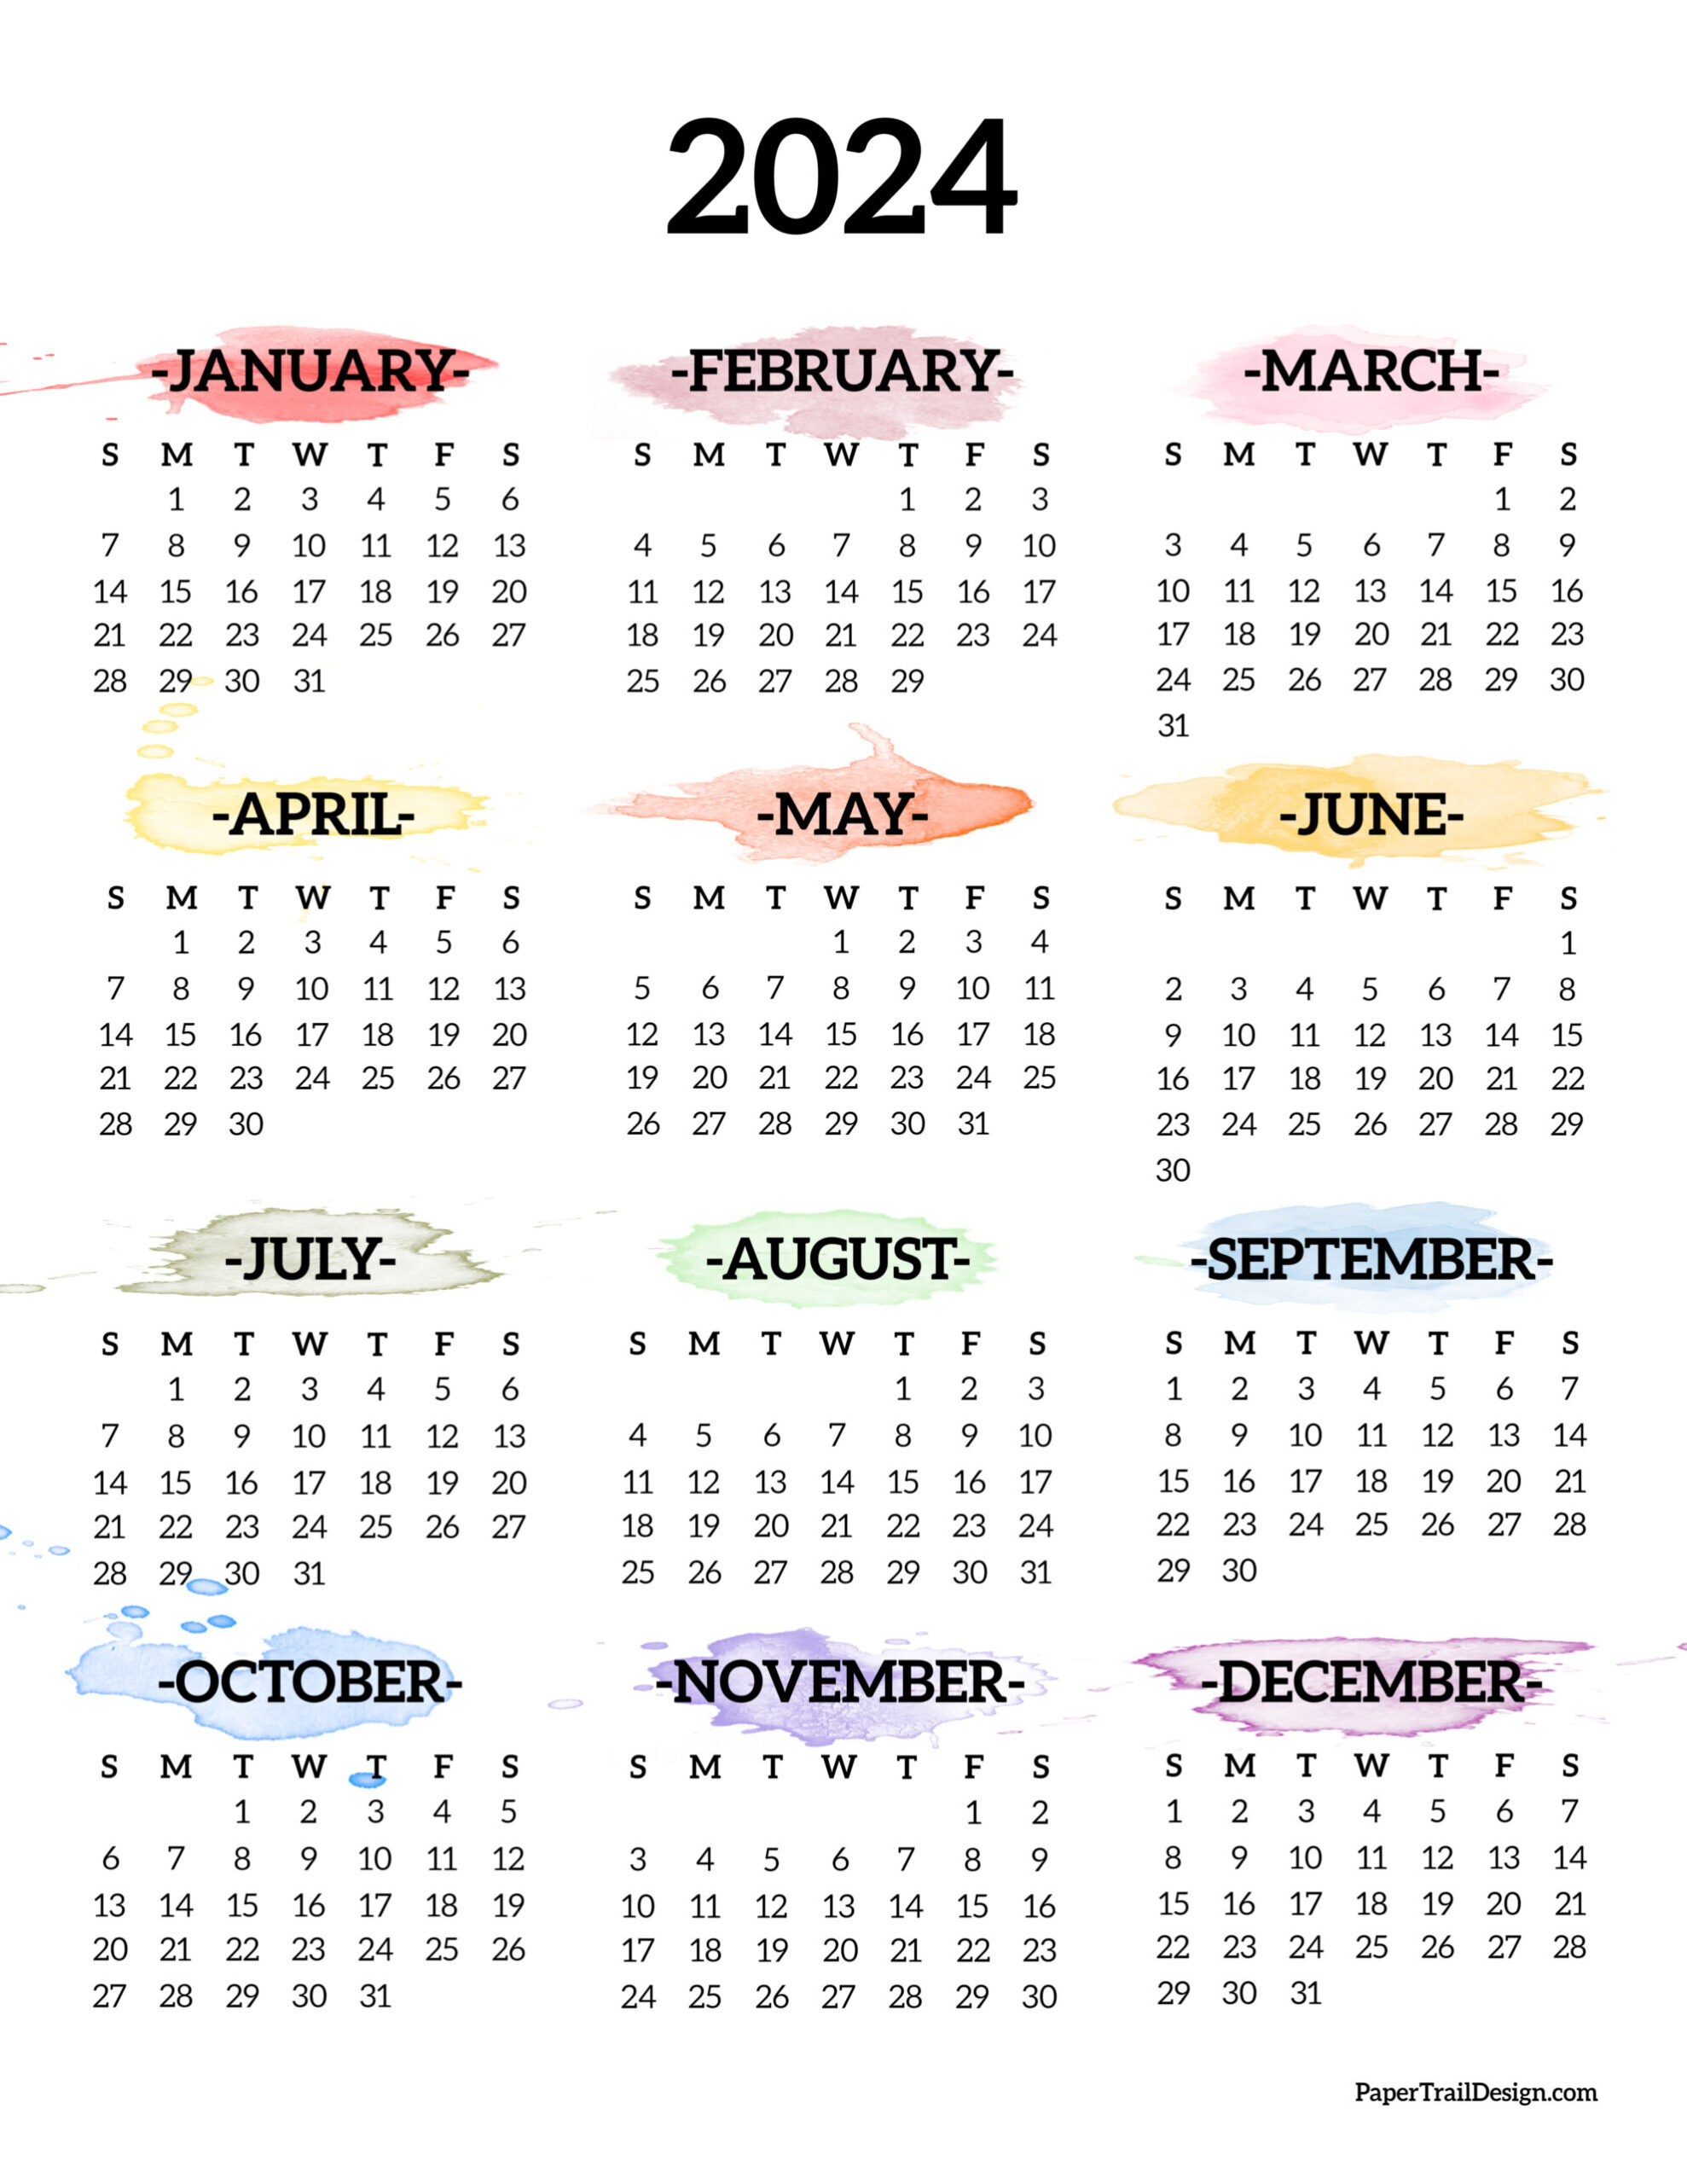 Calendar 2024 Printable One Page - Paper Trail Design | Annual Calendar 2024